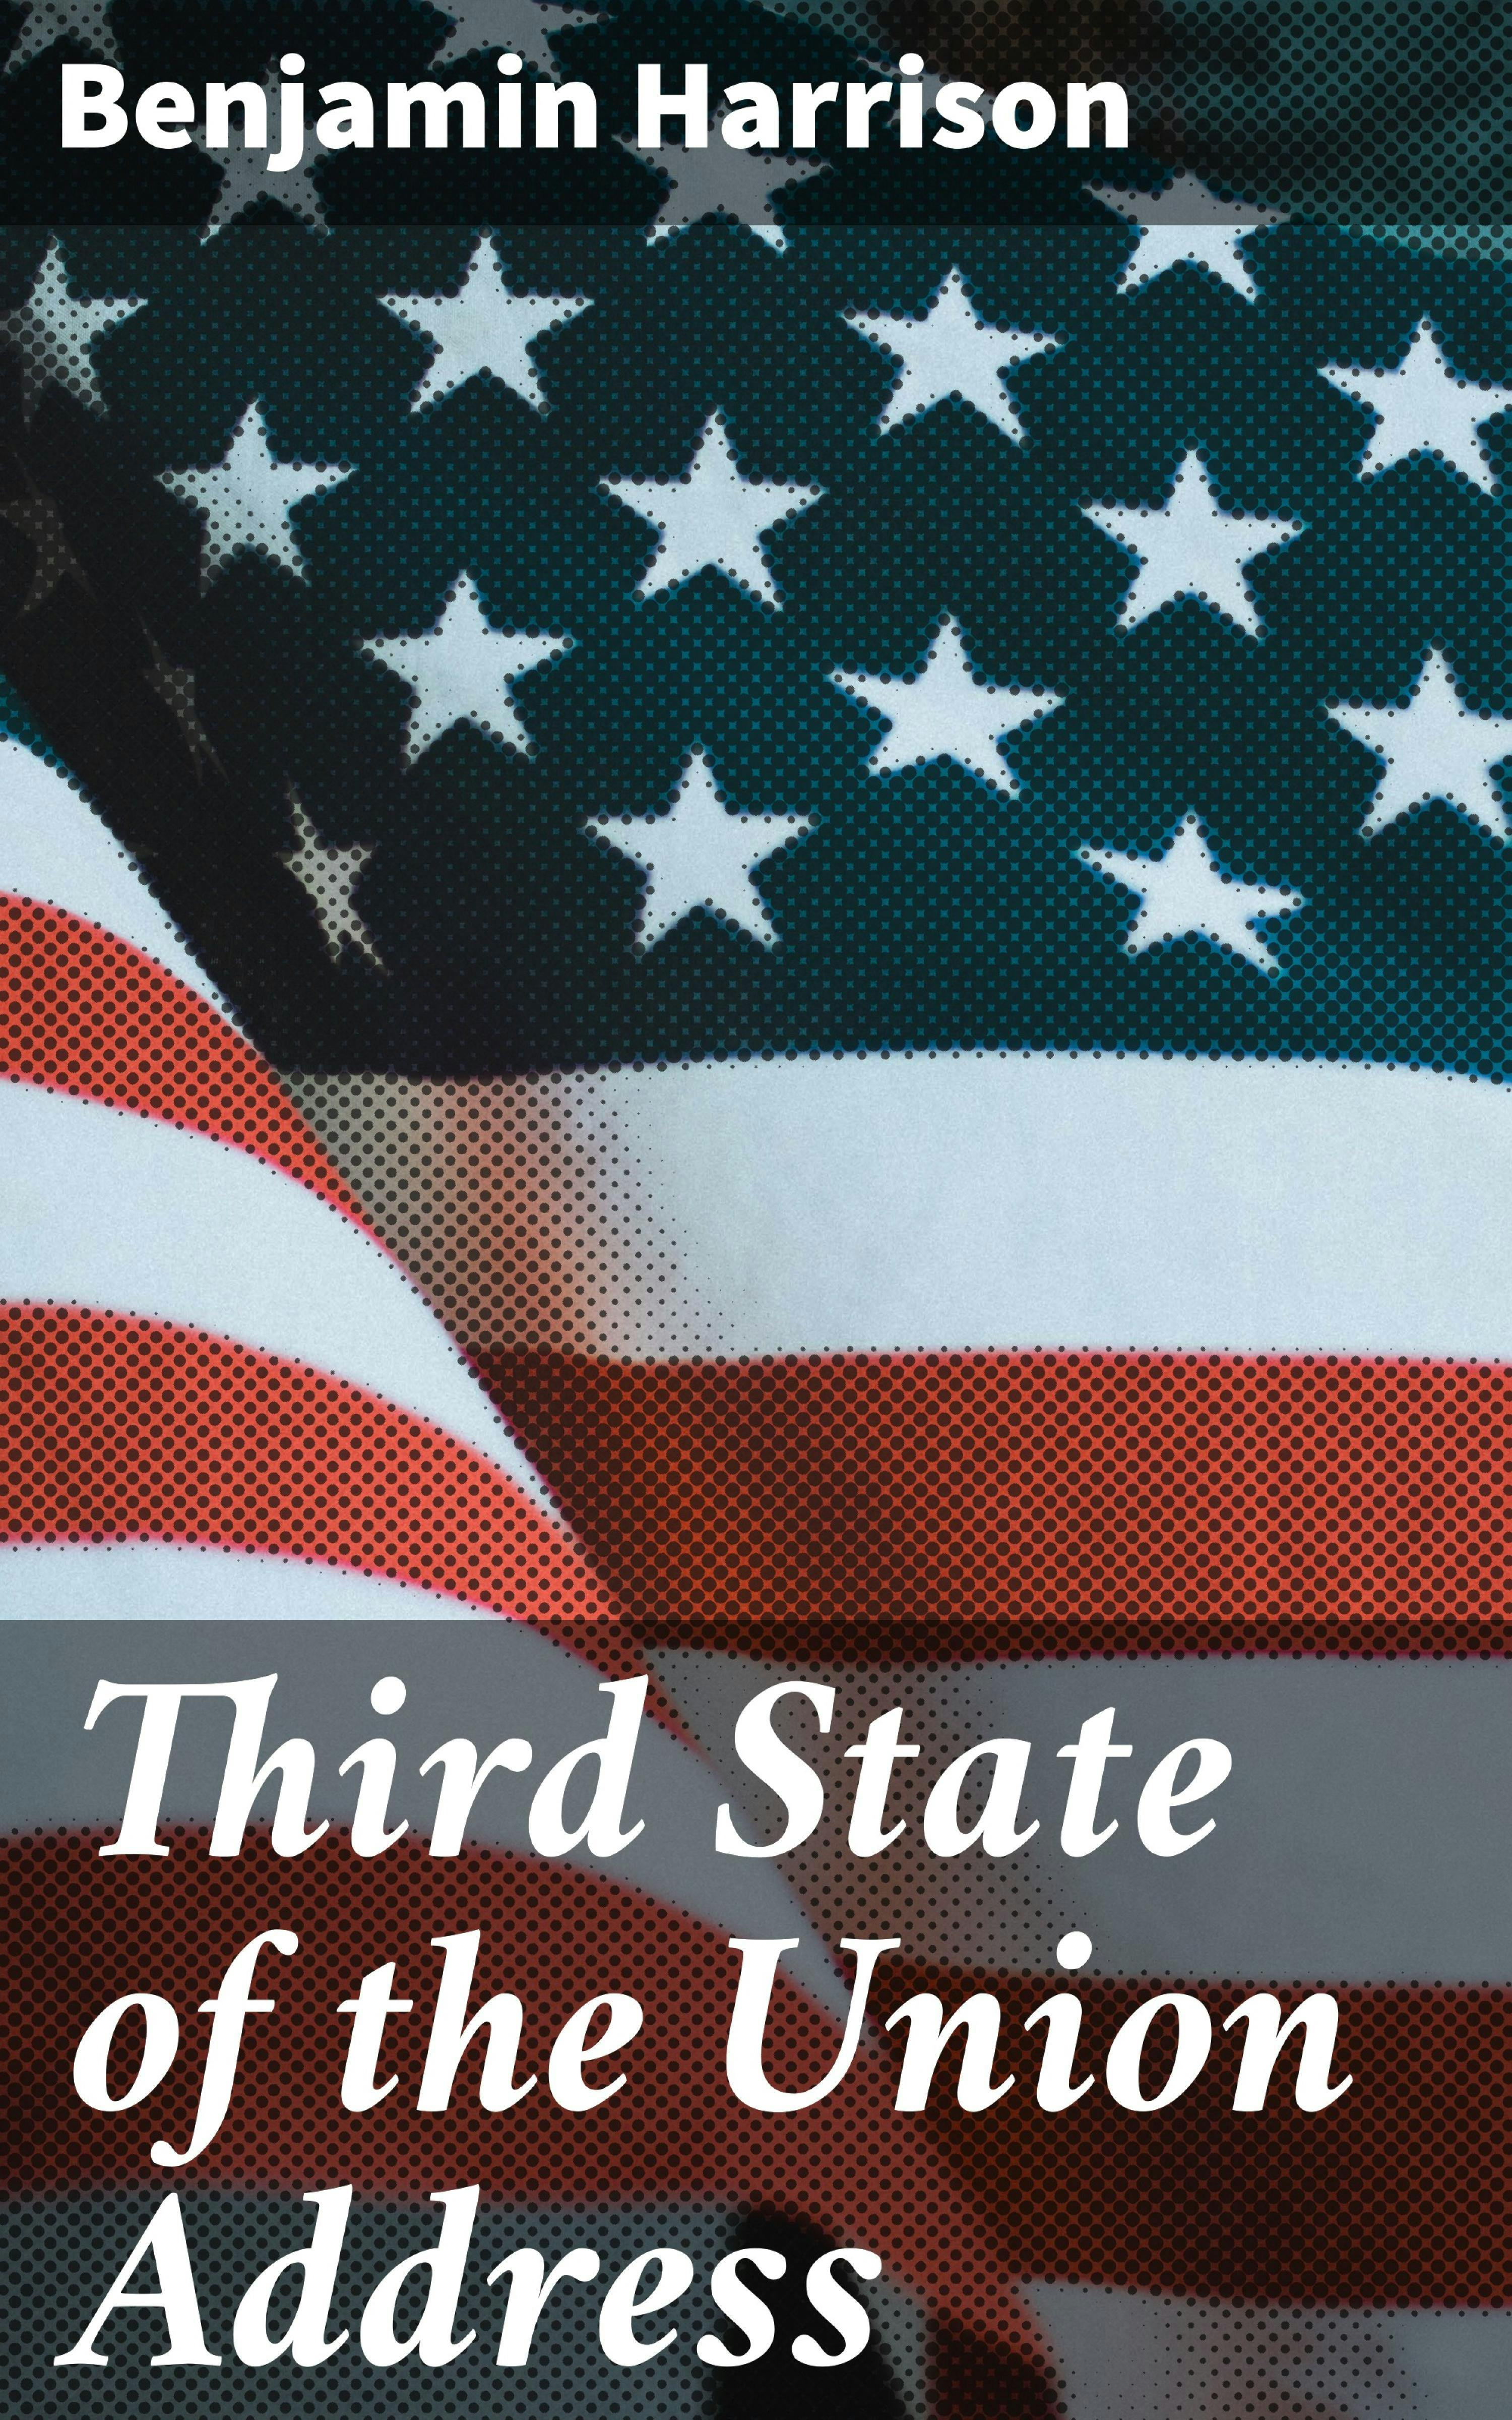 Third State of the Union Address - Benjamin Harrison